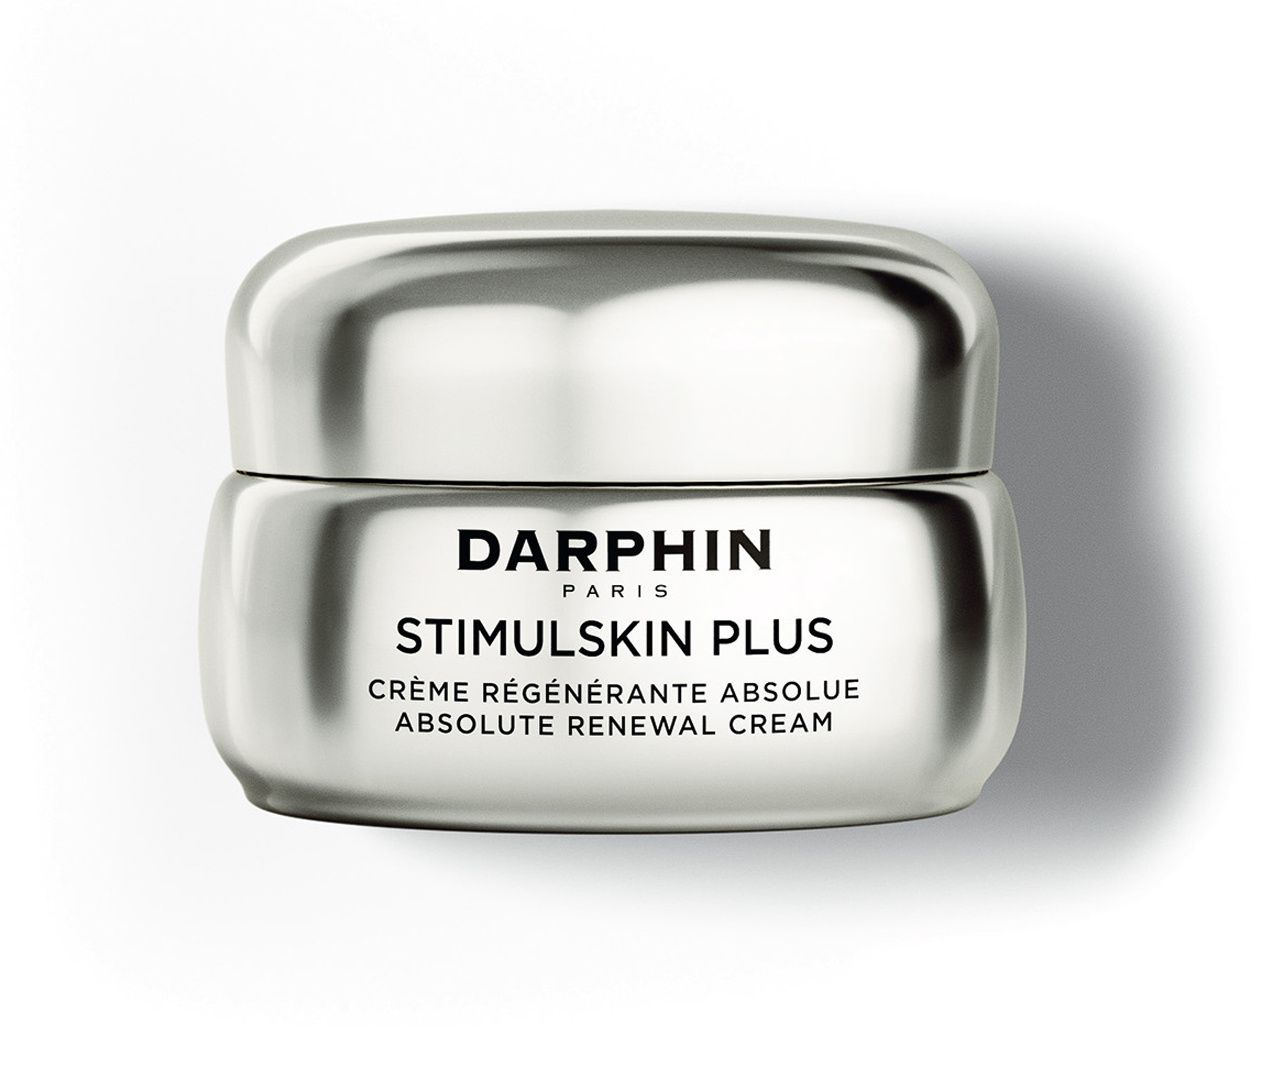 Darphin Stimulskin Plus Creme Regenerante Absolue regenerační krém 50 ml Darphin